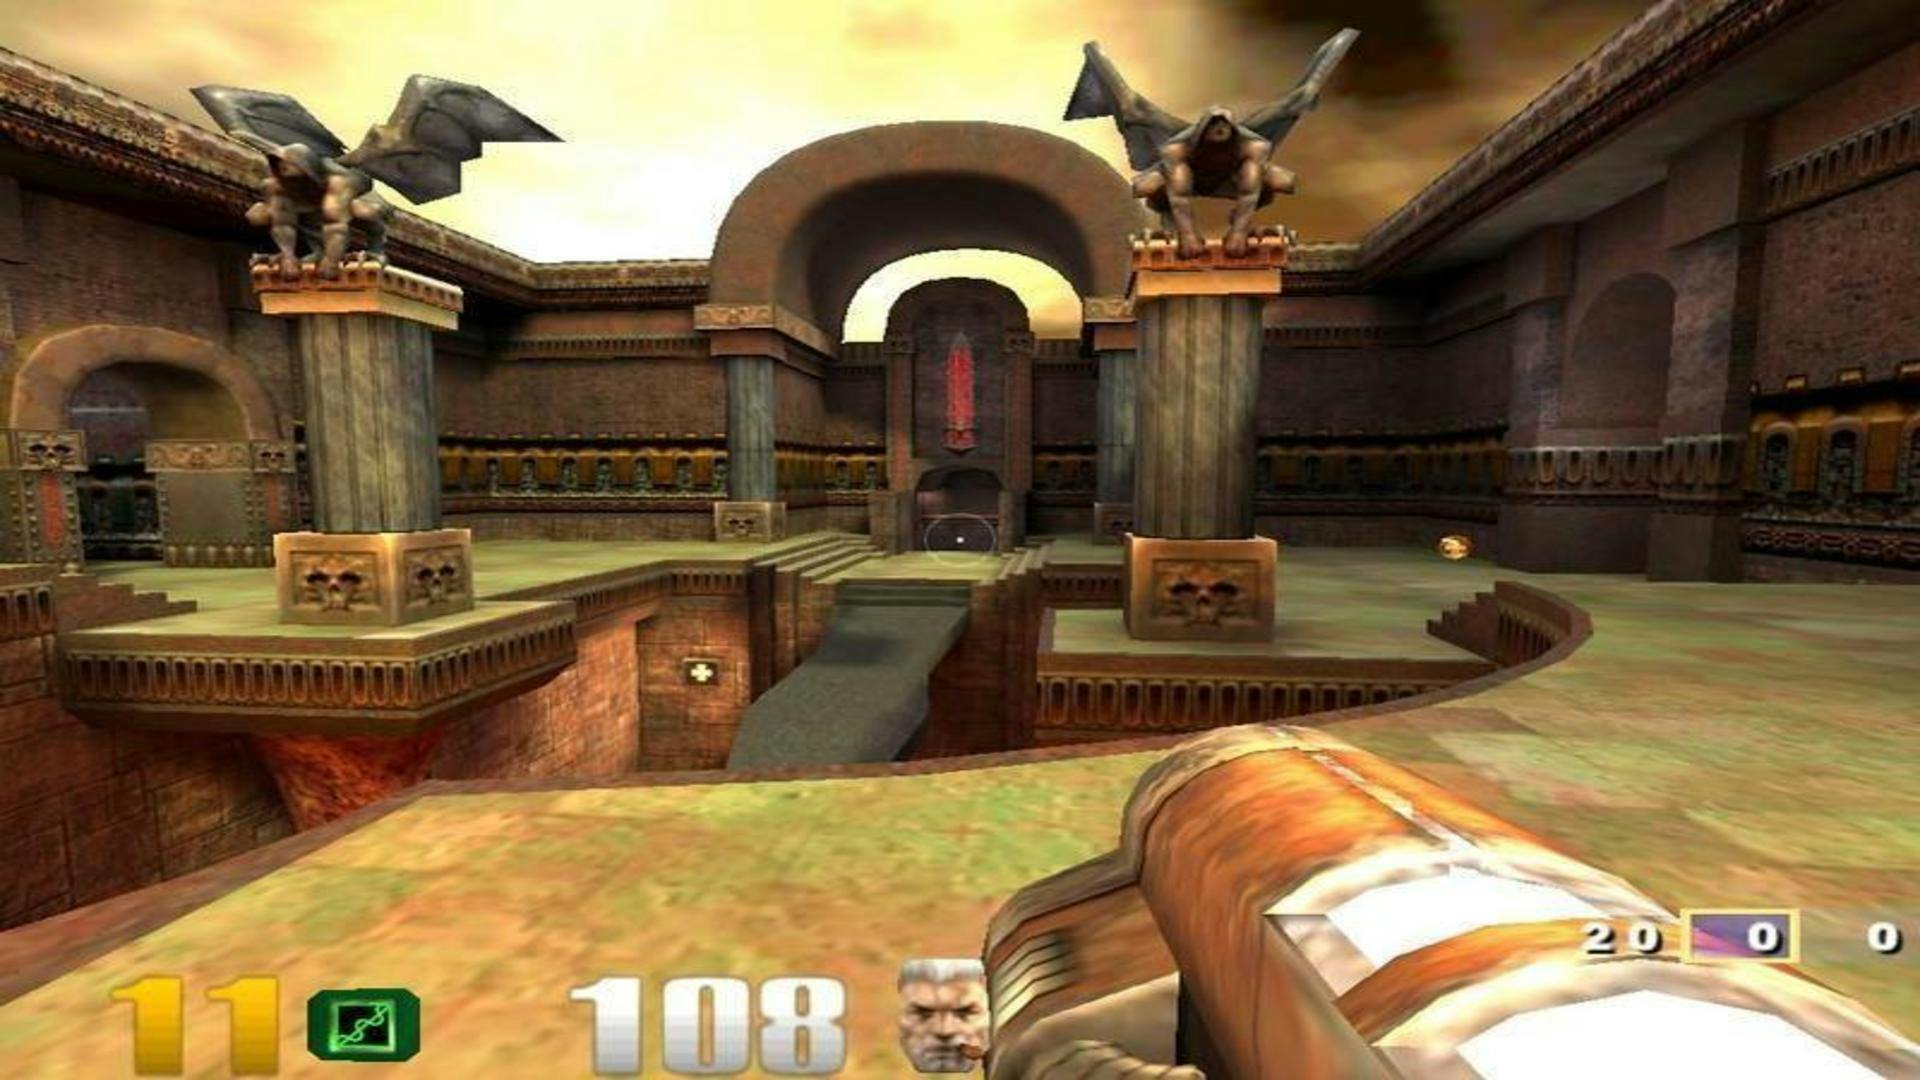 Arena игры на пк. Квейк 3. Игра Quake 3 Arena. 1999 Quake III Arena. Quake Арена.